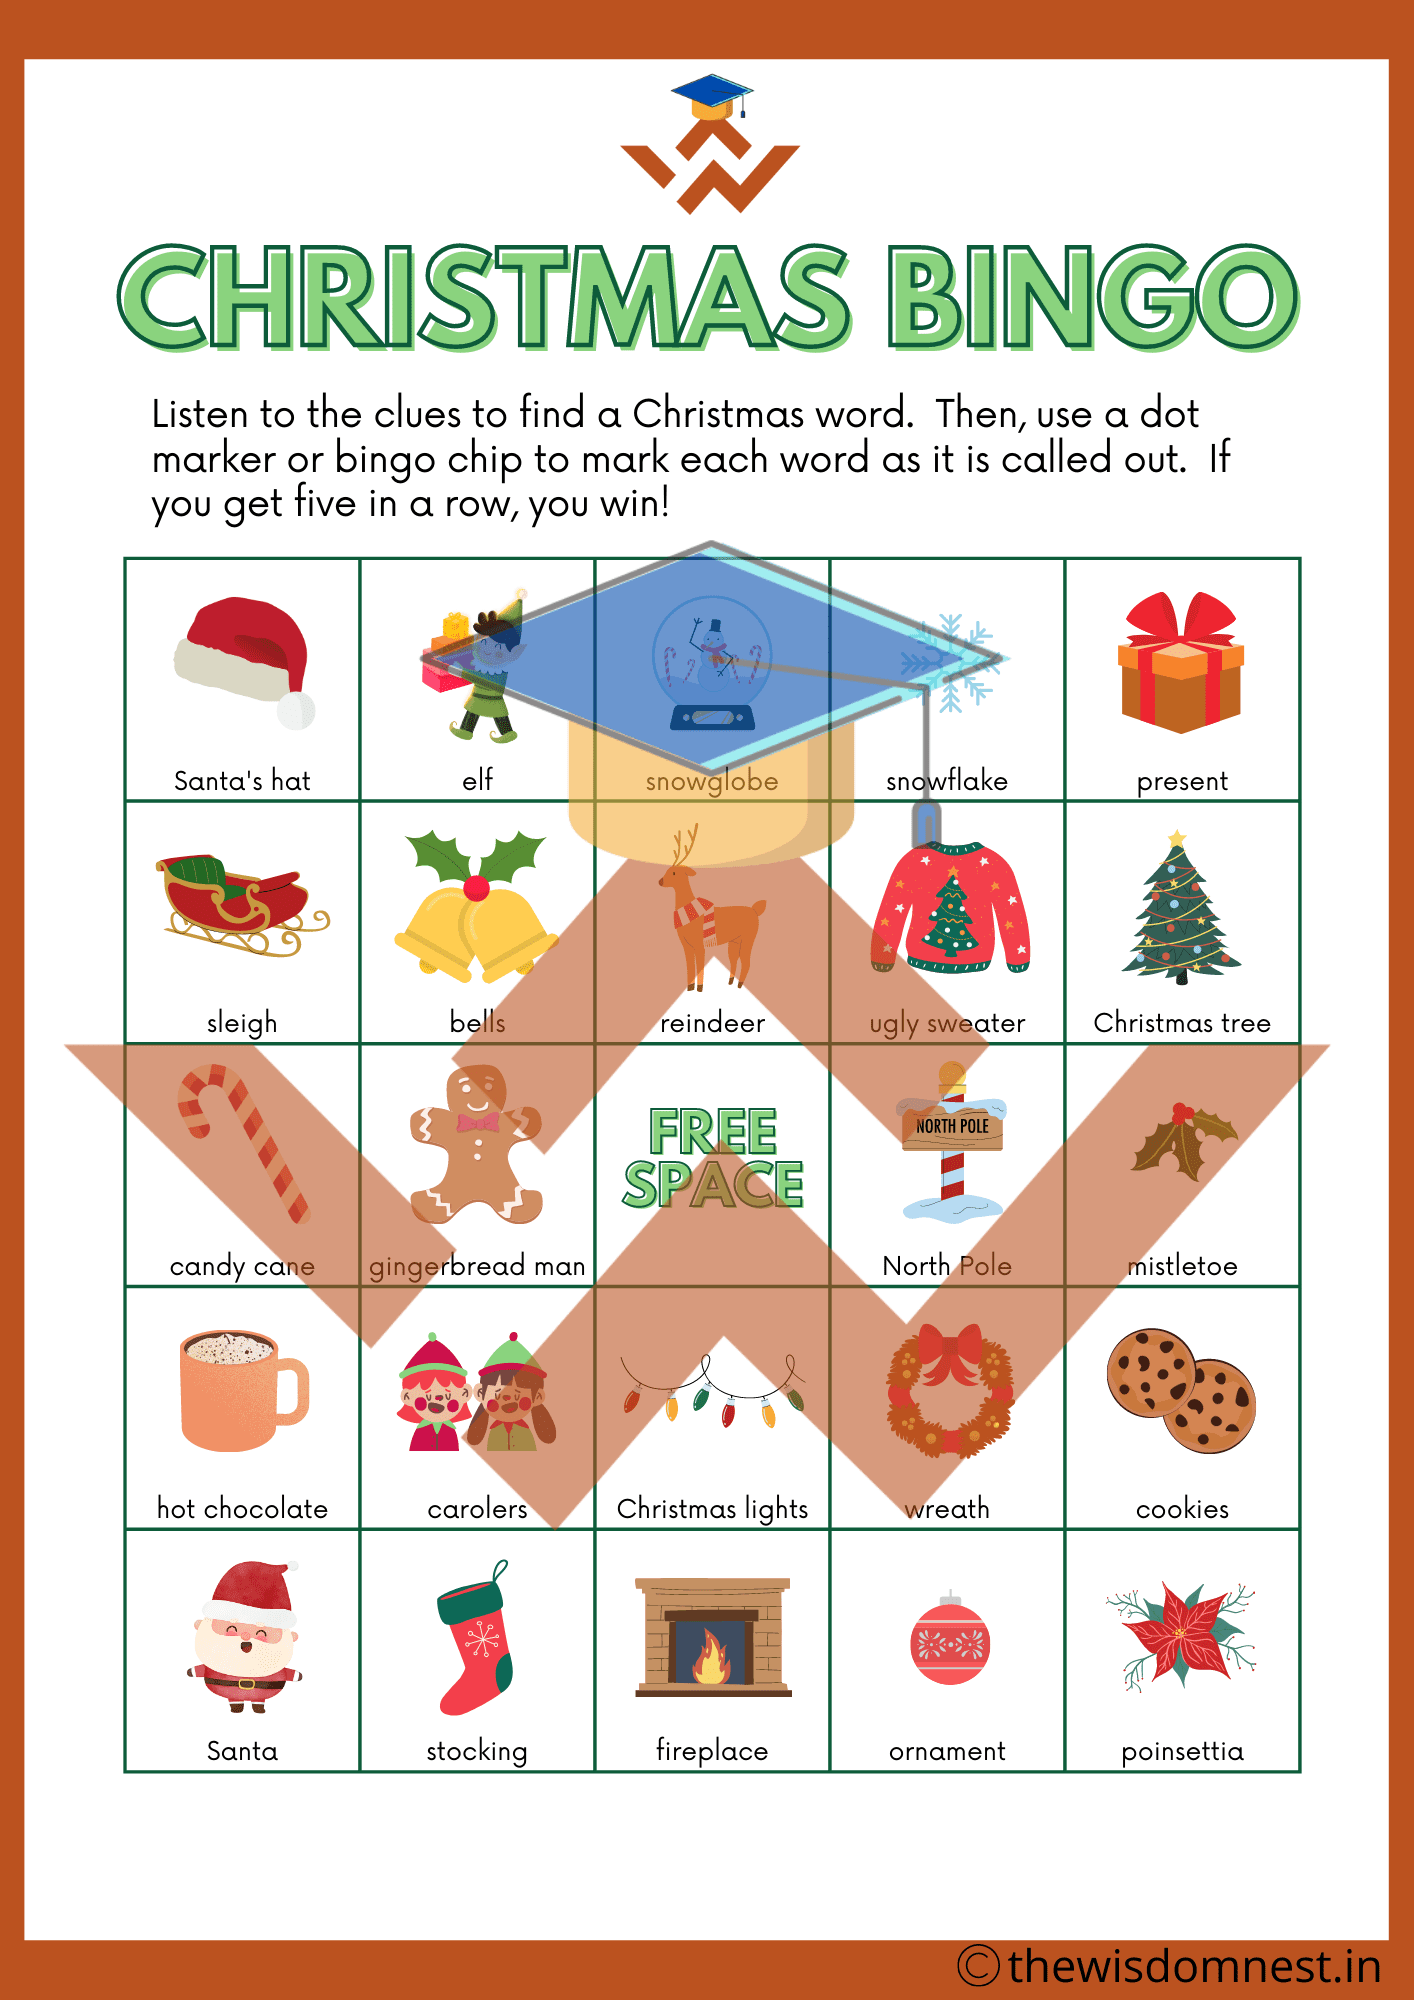 WN Christmas bingo worksheet